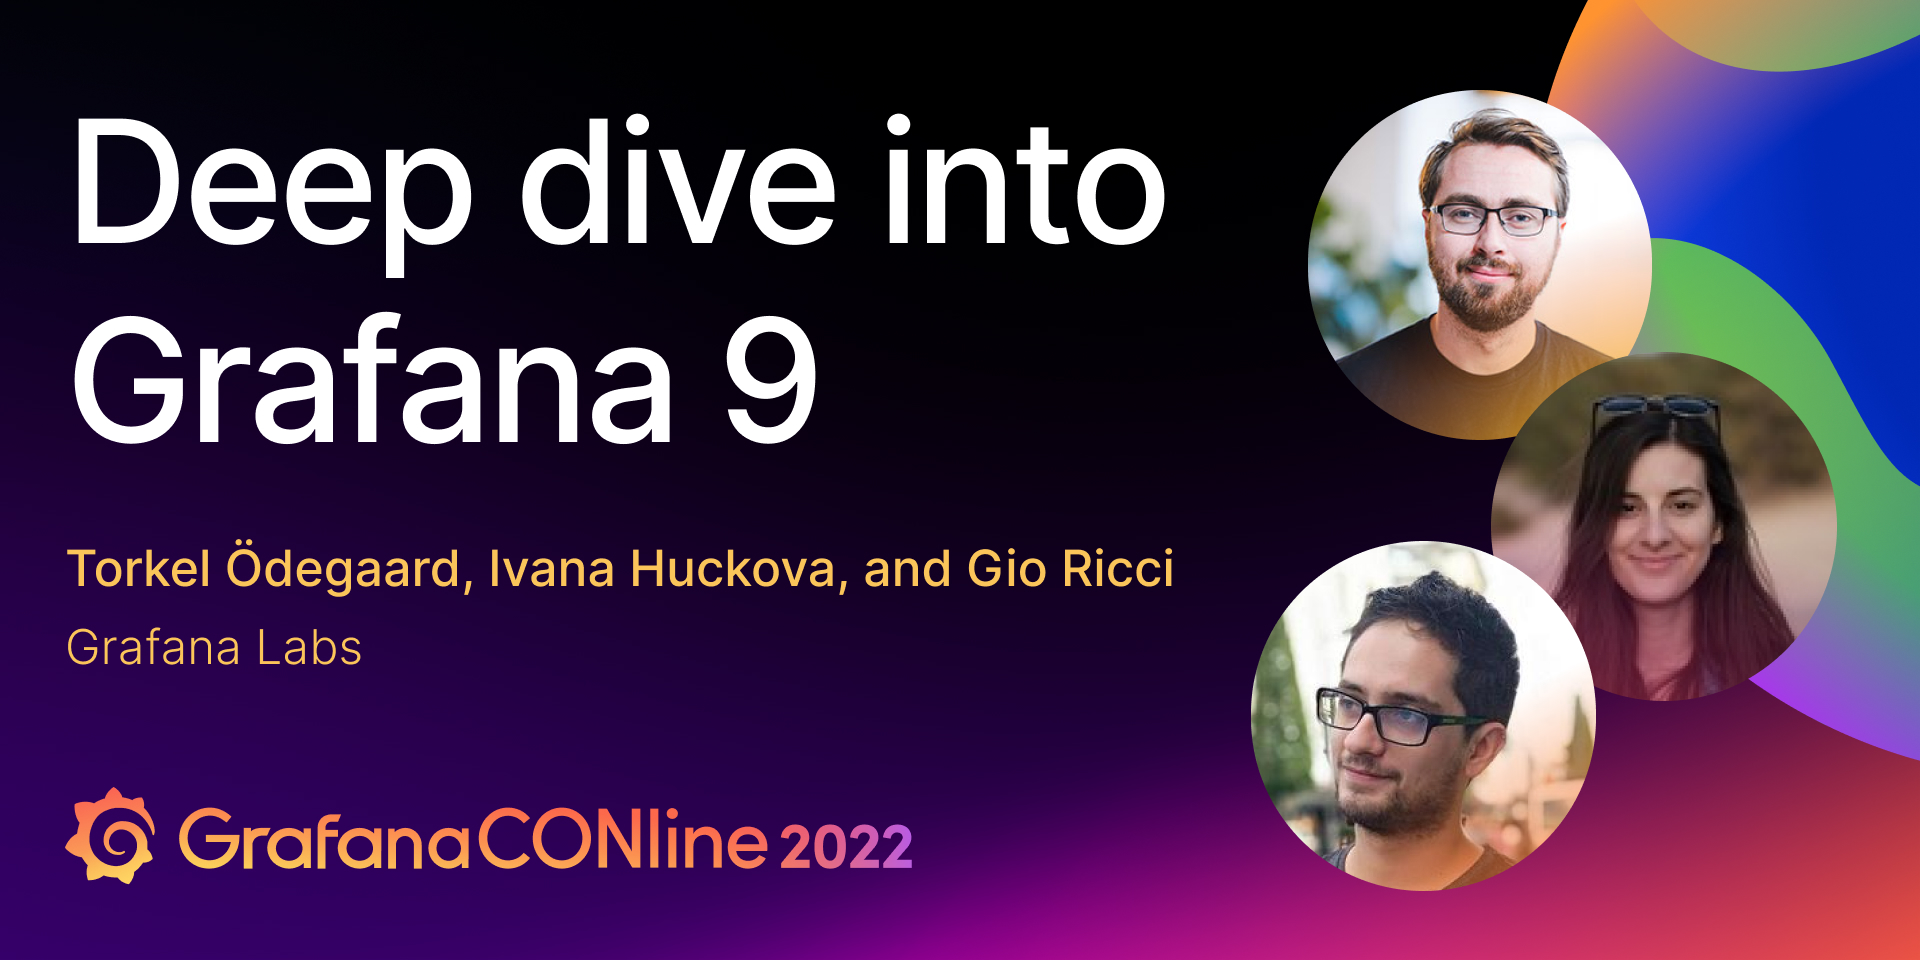 Grafana 9.0 deep dive session at GrafanaCONline 2022